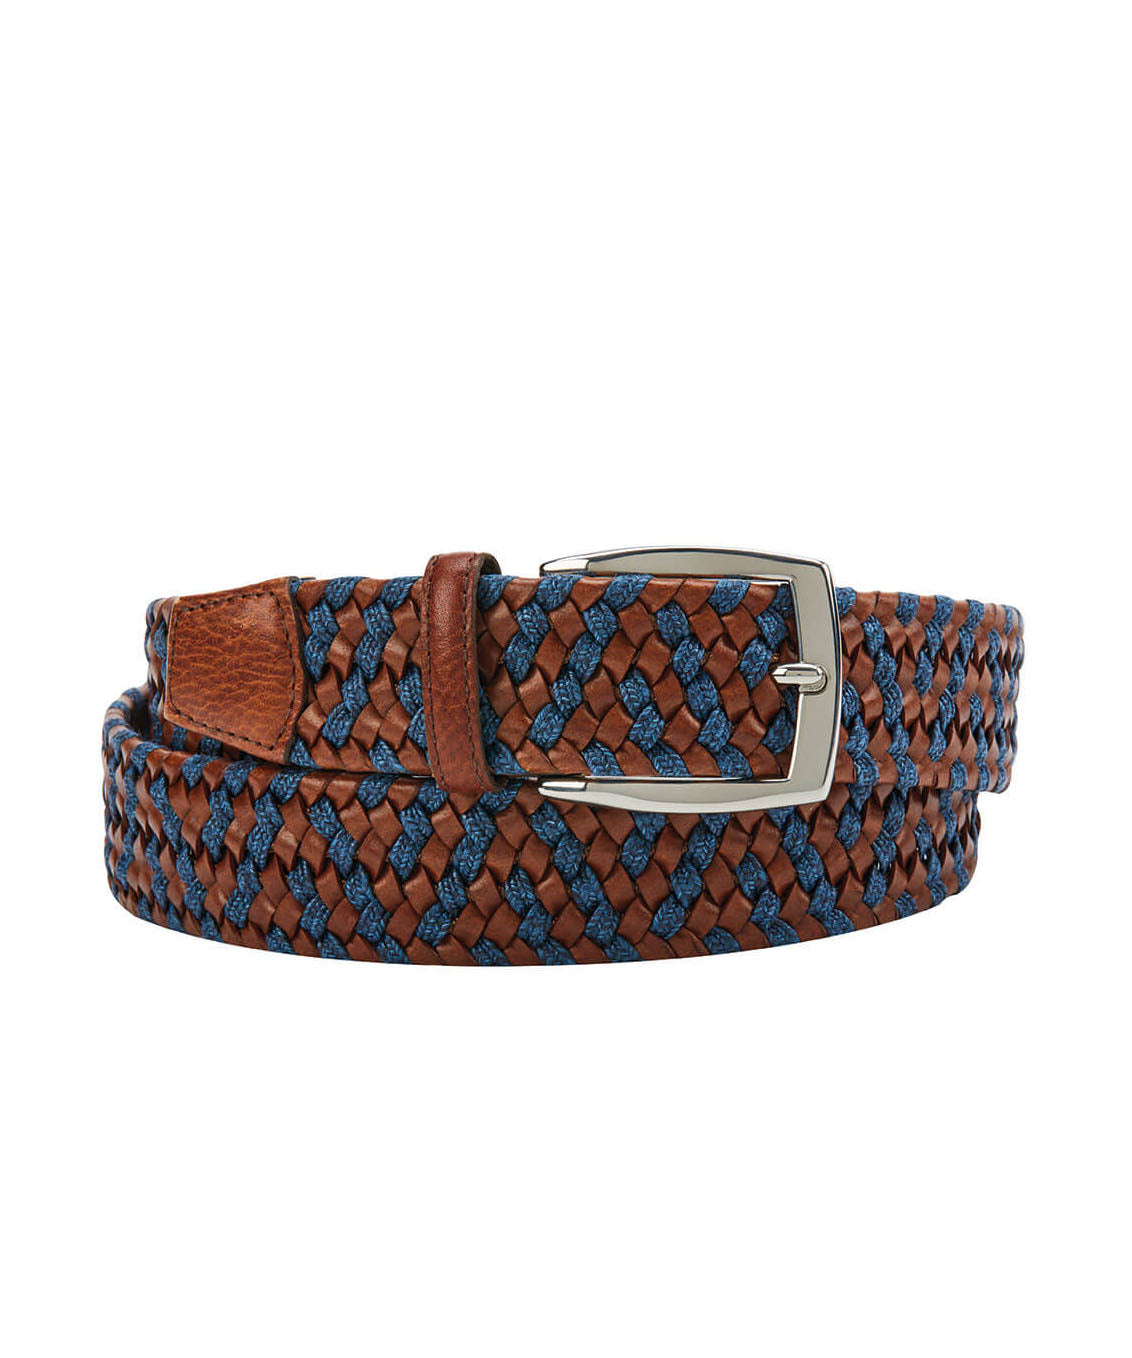 Elastic braided belt in navy blue - Rob III